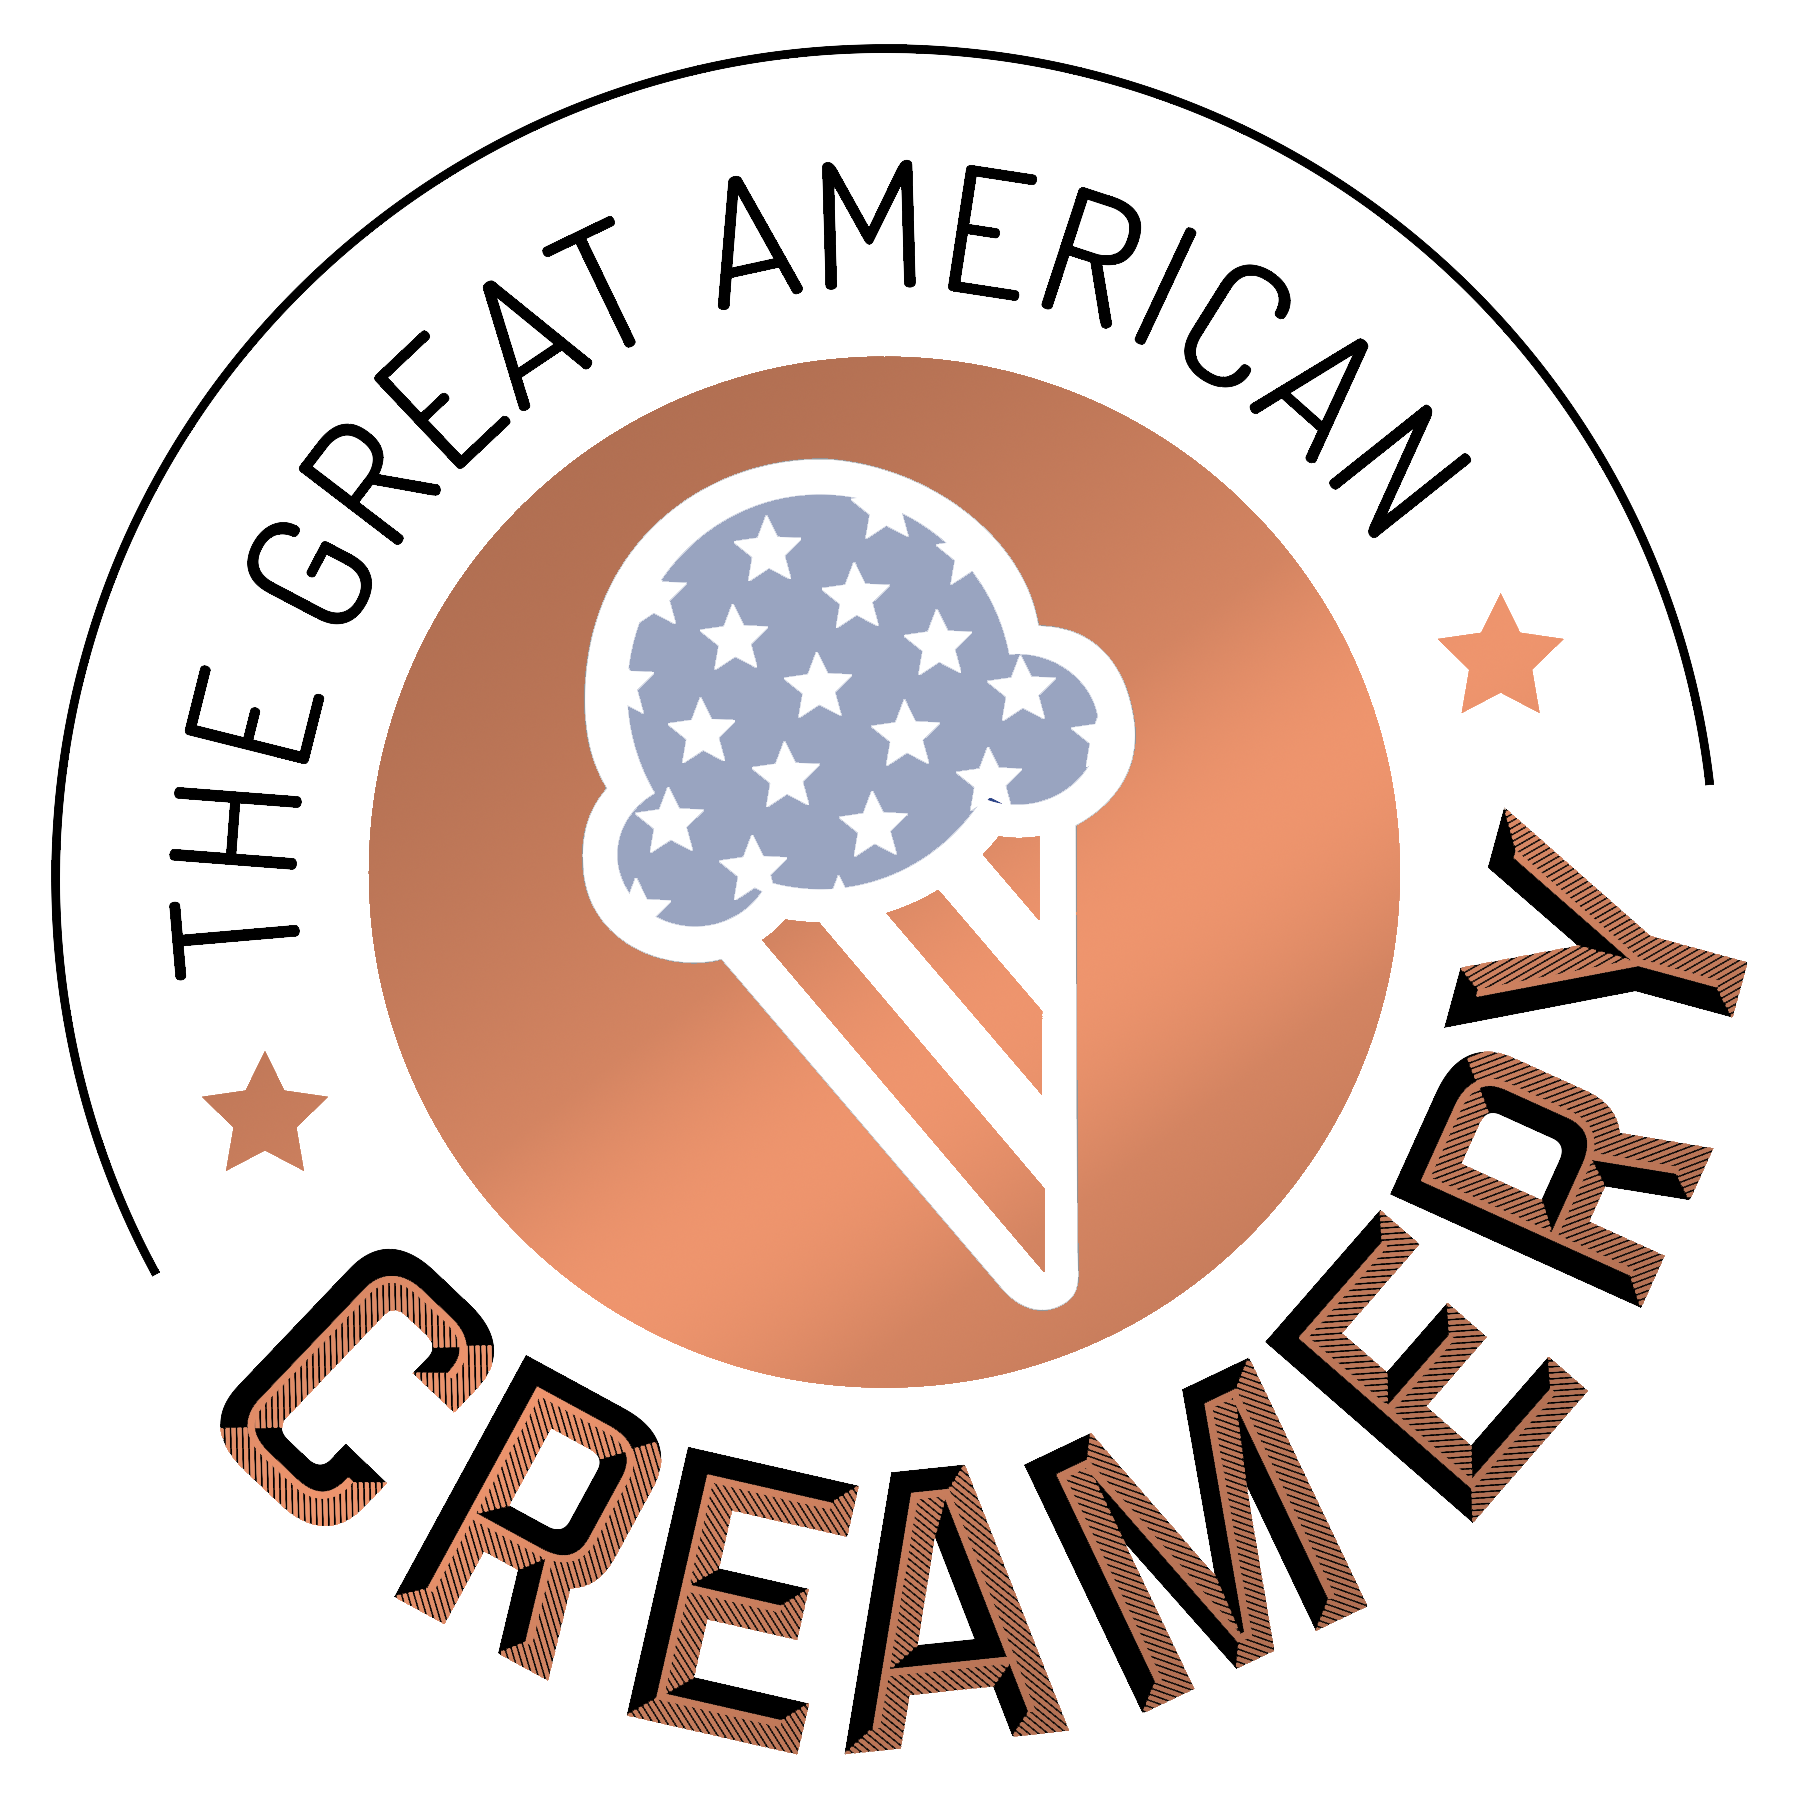 Great American Creamery